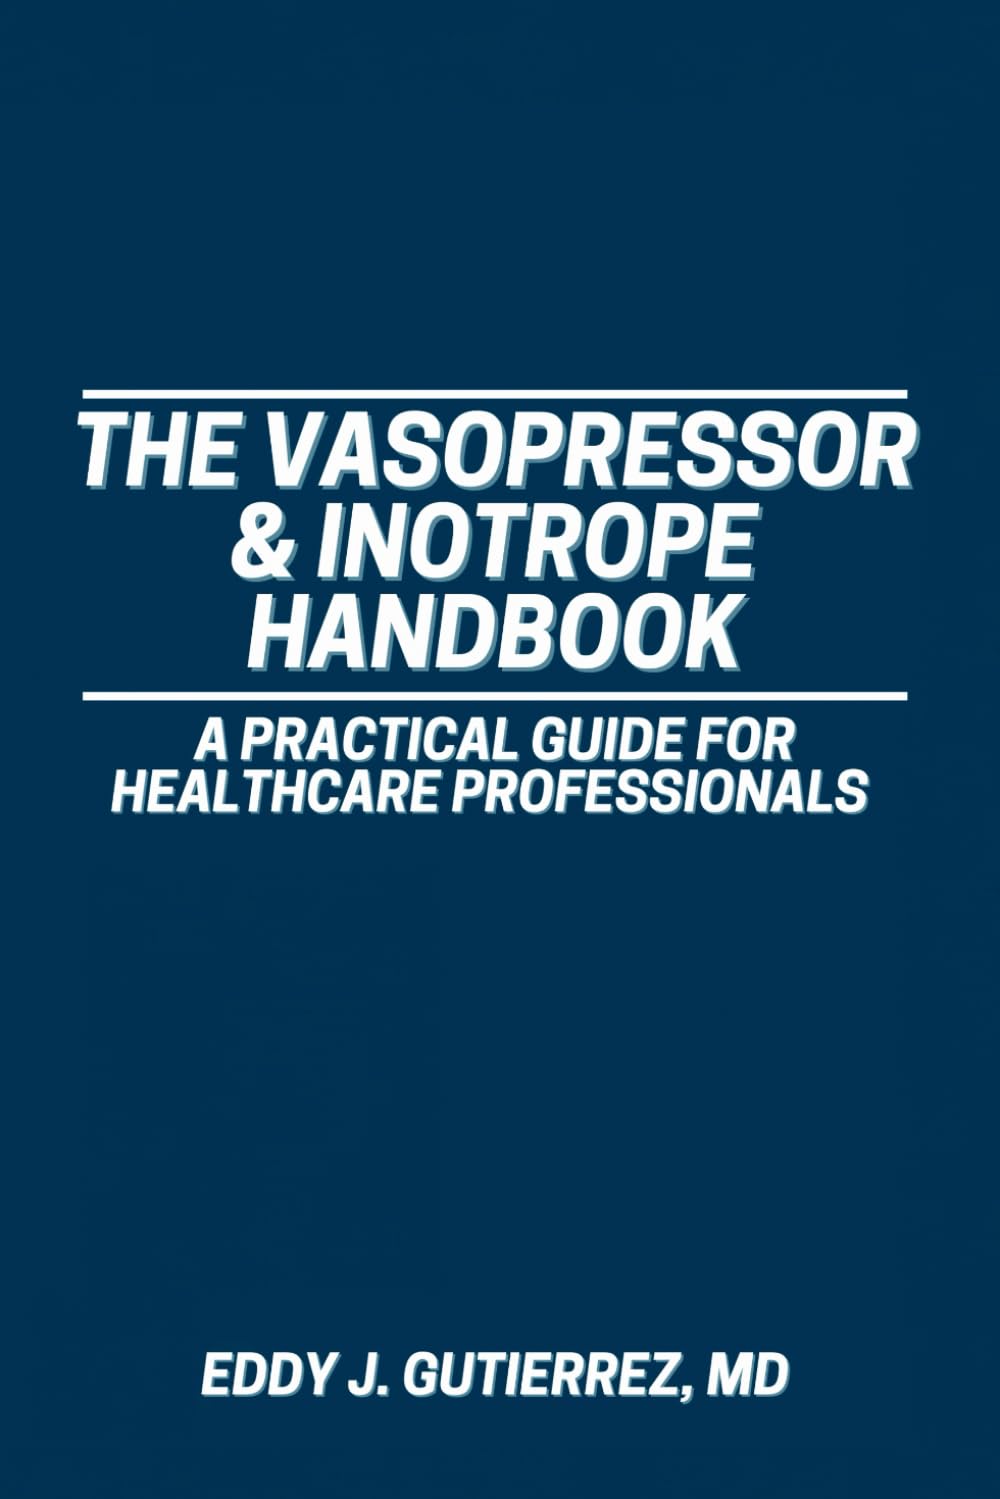 The Vasopressor & Inotrope Handbook: A Practical Guide for Healthcare Professionals